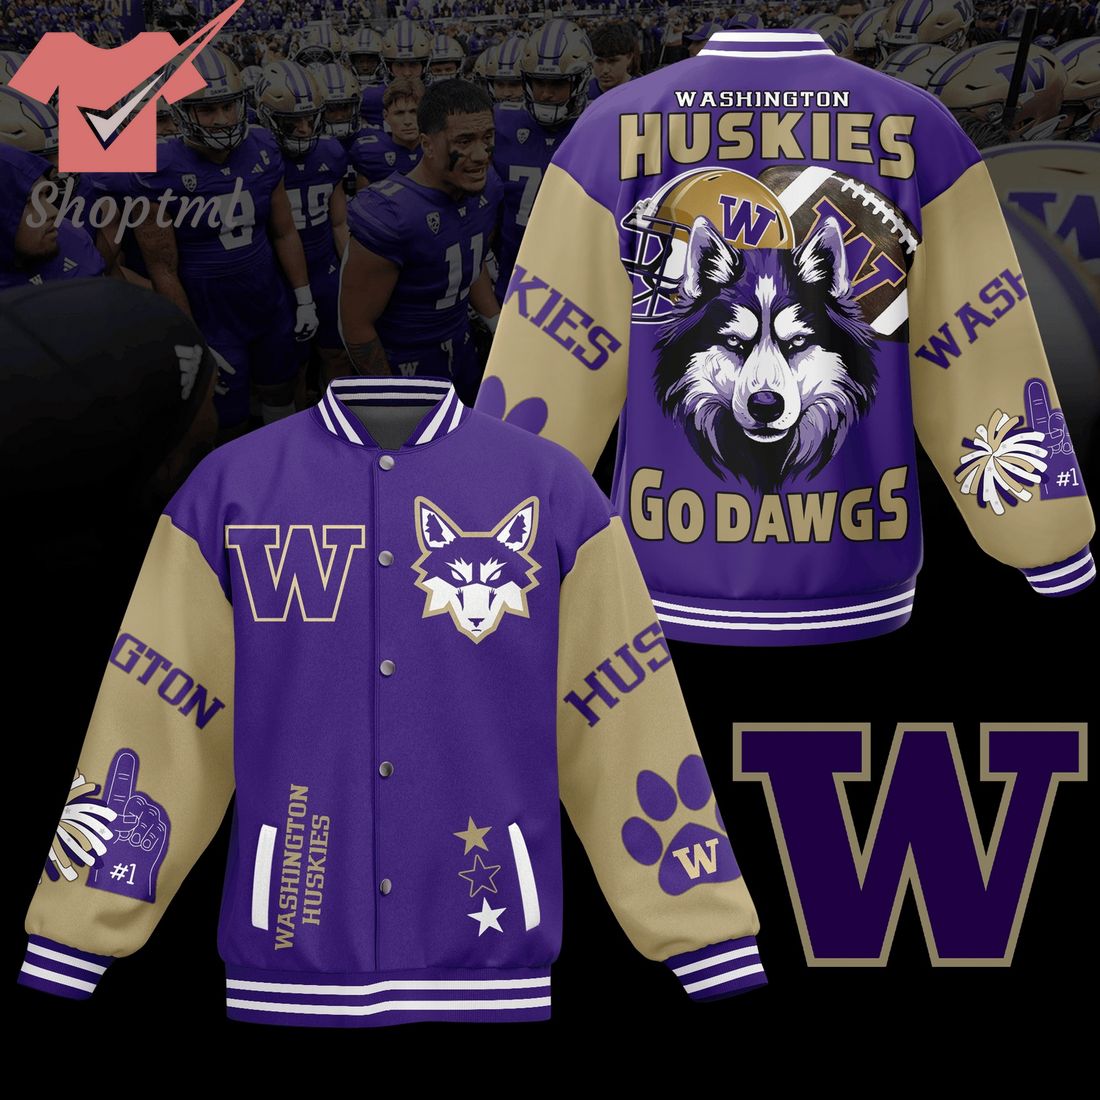 Washington Huskies go dawgs baseball jacket